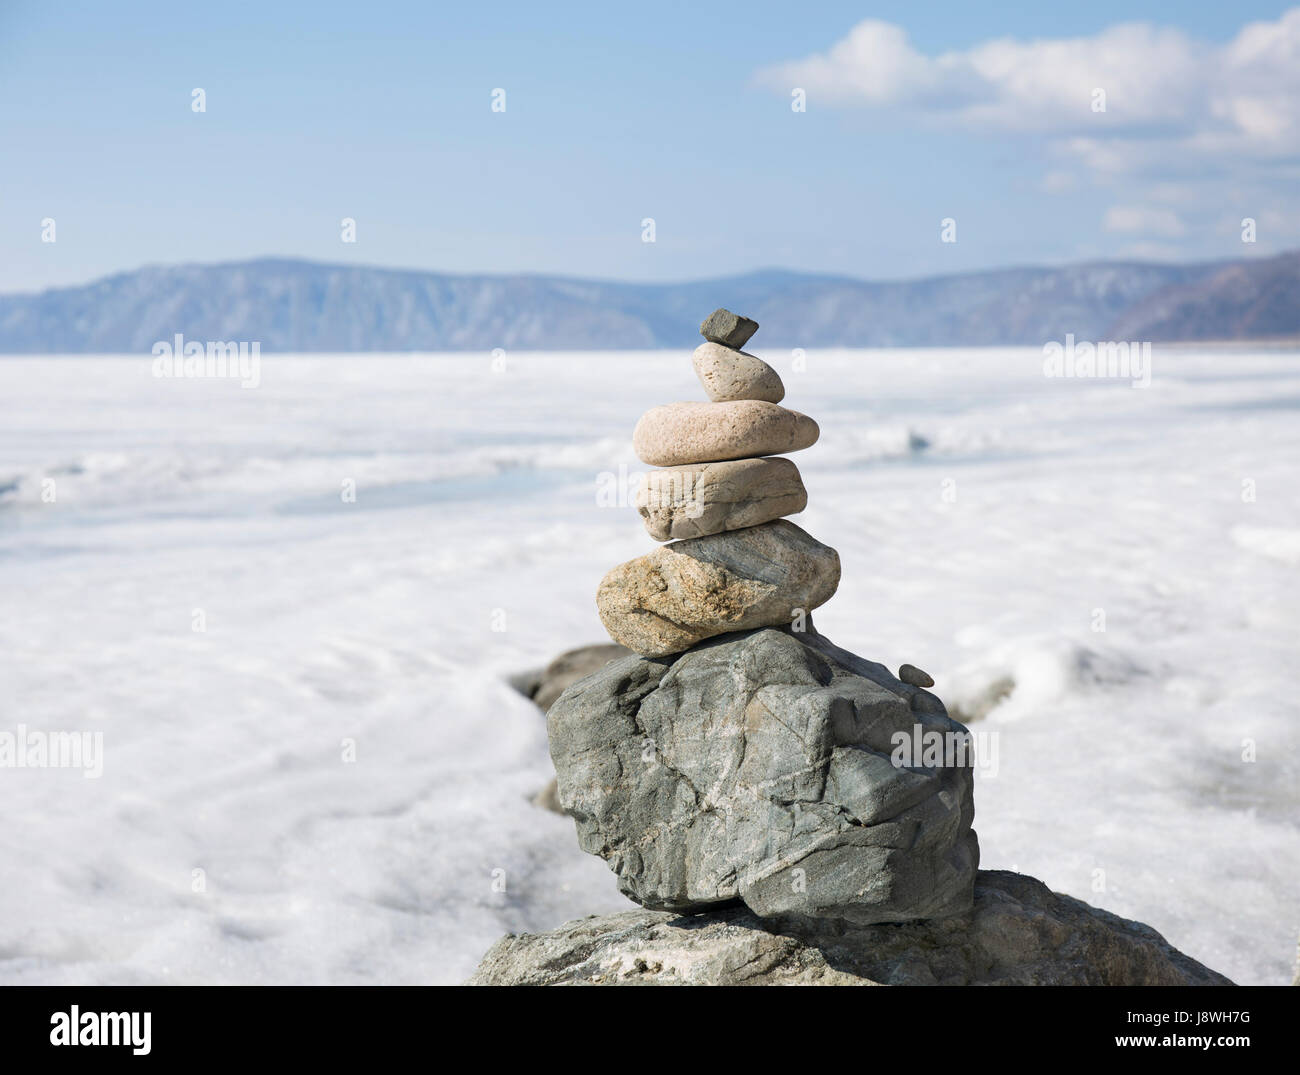 Stone tower on ice winter background. Baical landscape. Stock Photo